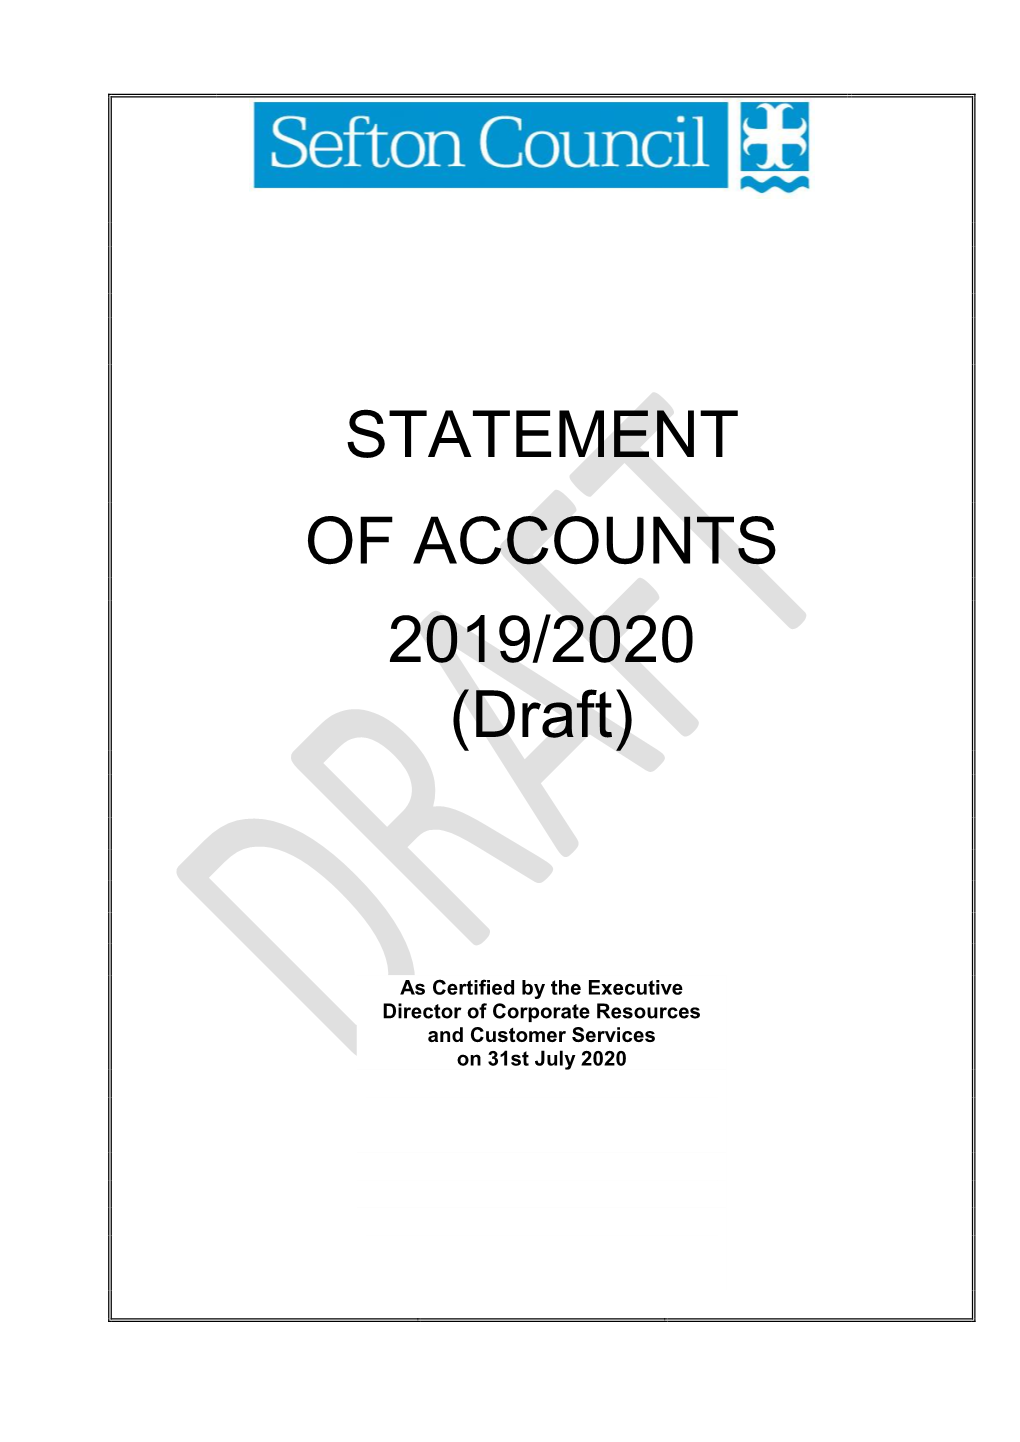 STATEMENT of ACCOUNTS 2019/2020 (Draft)